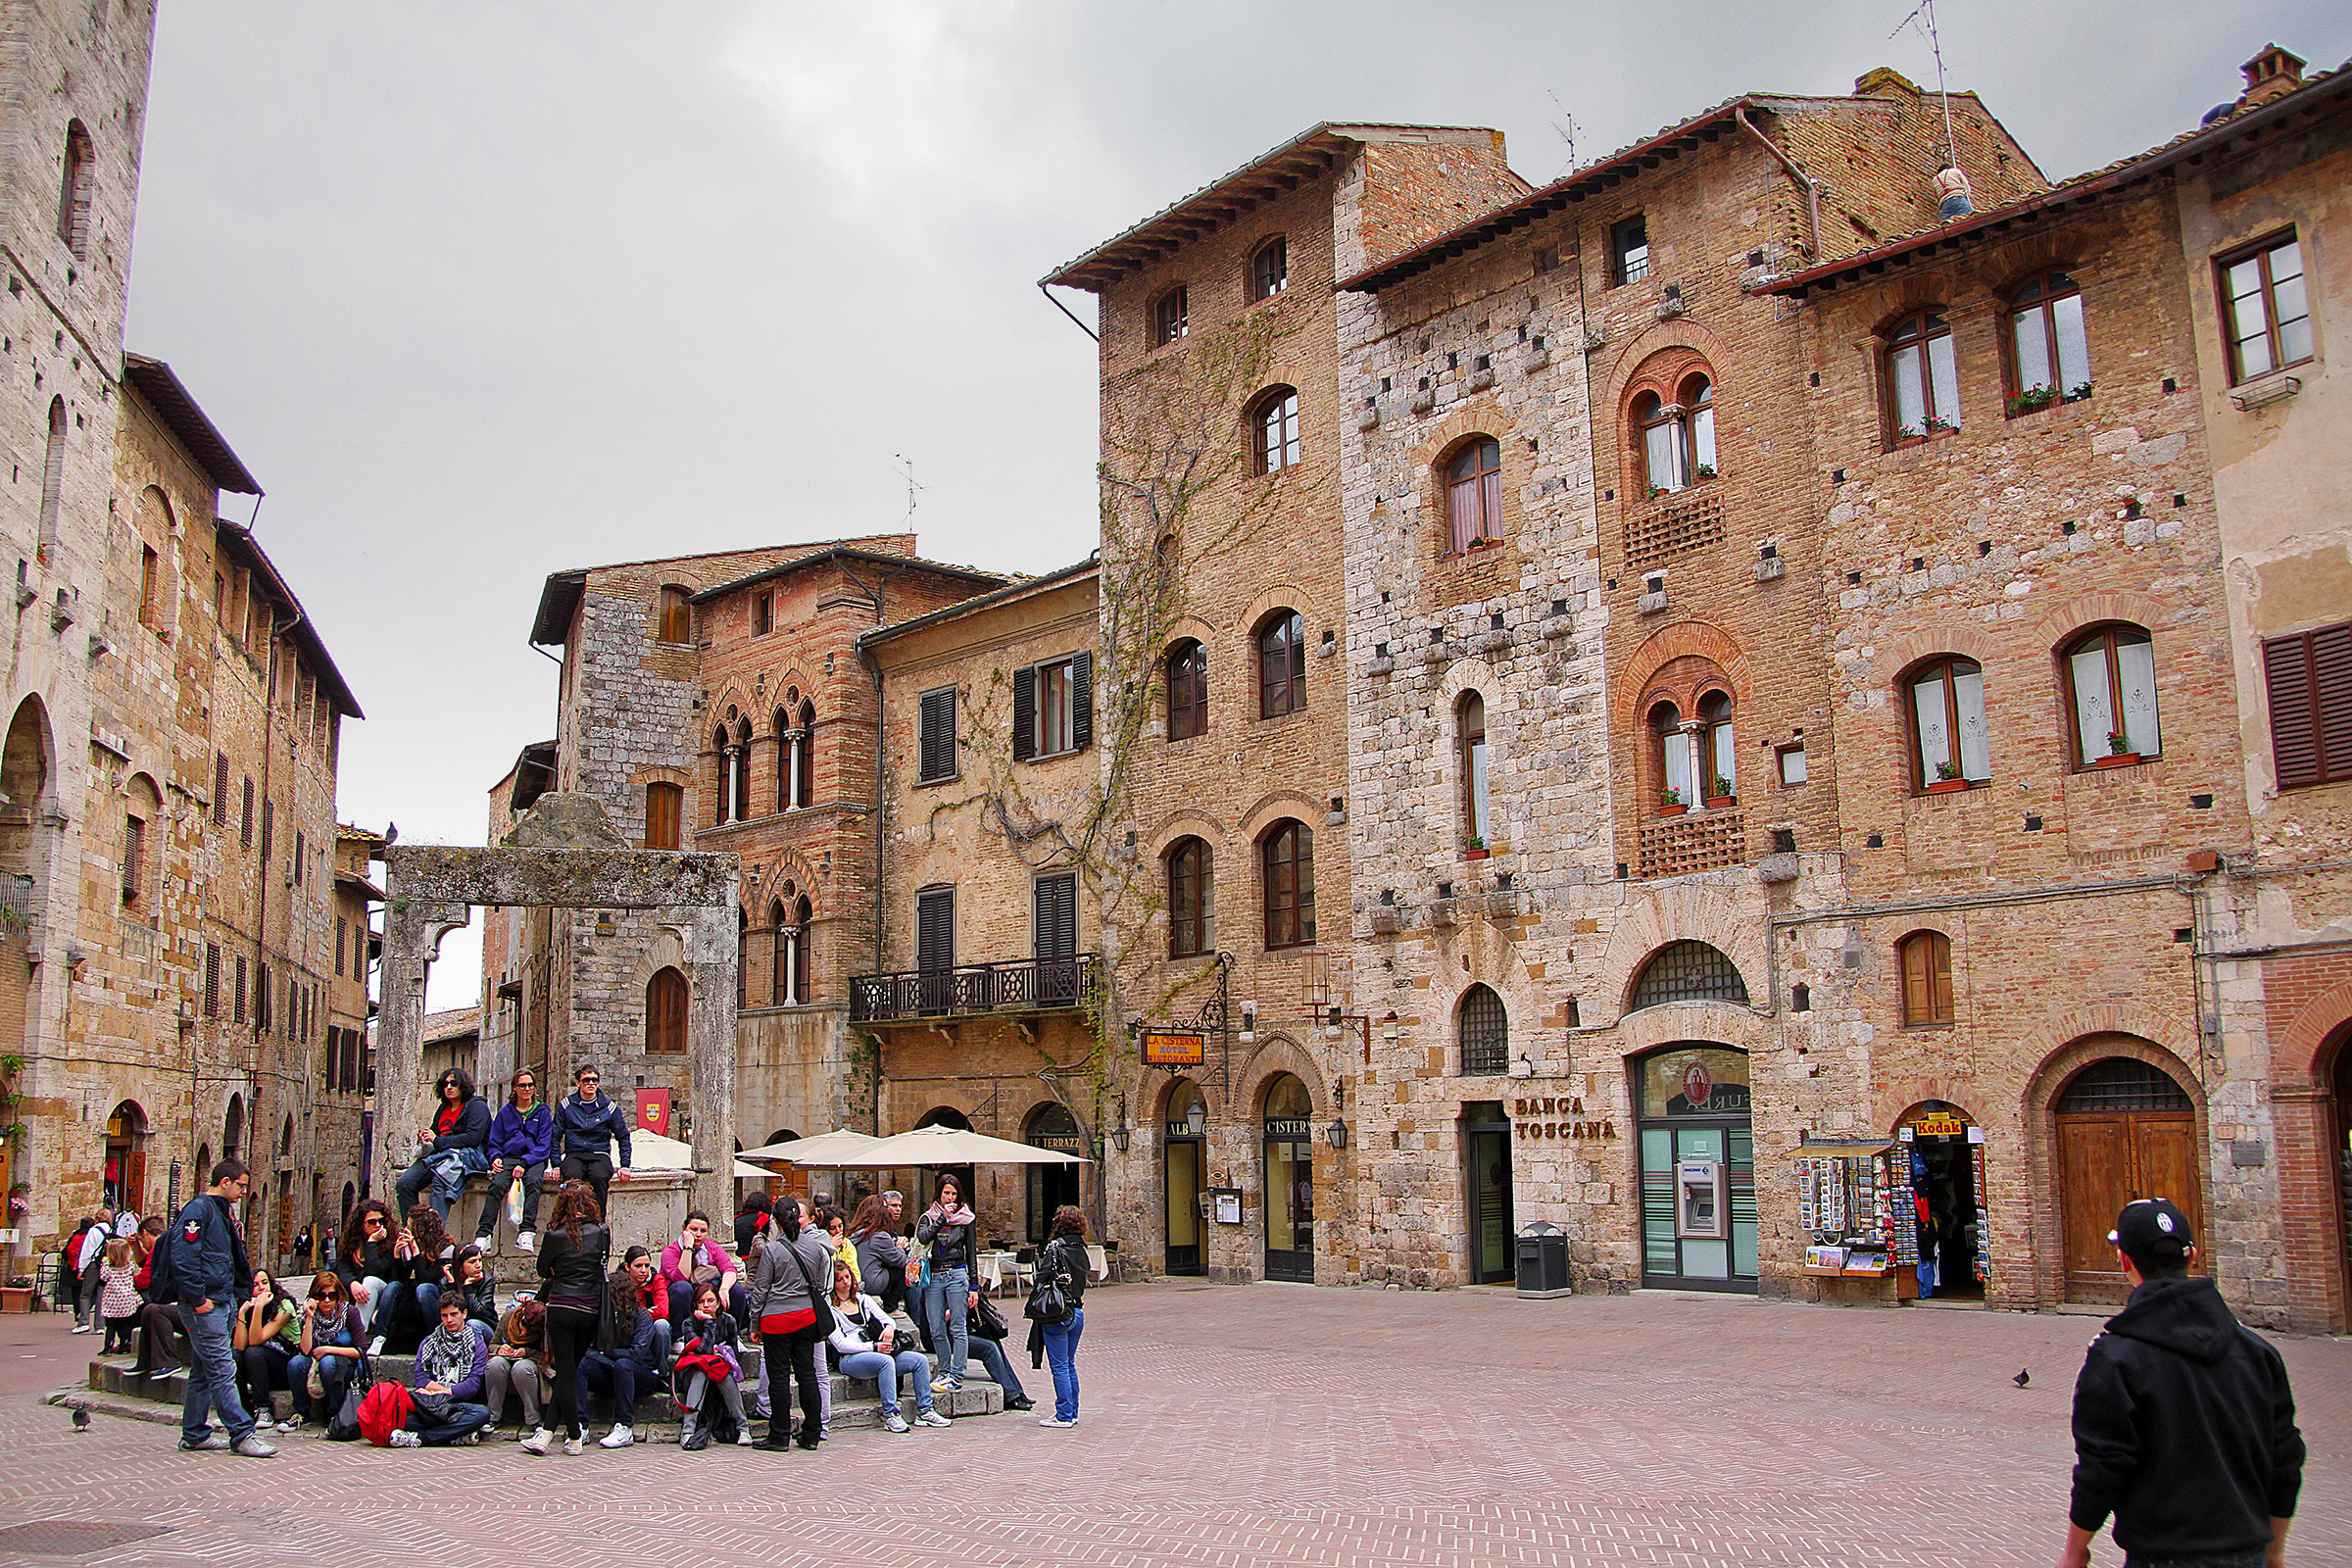 The main piazza of San Gimignano